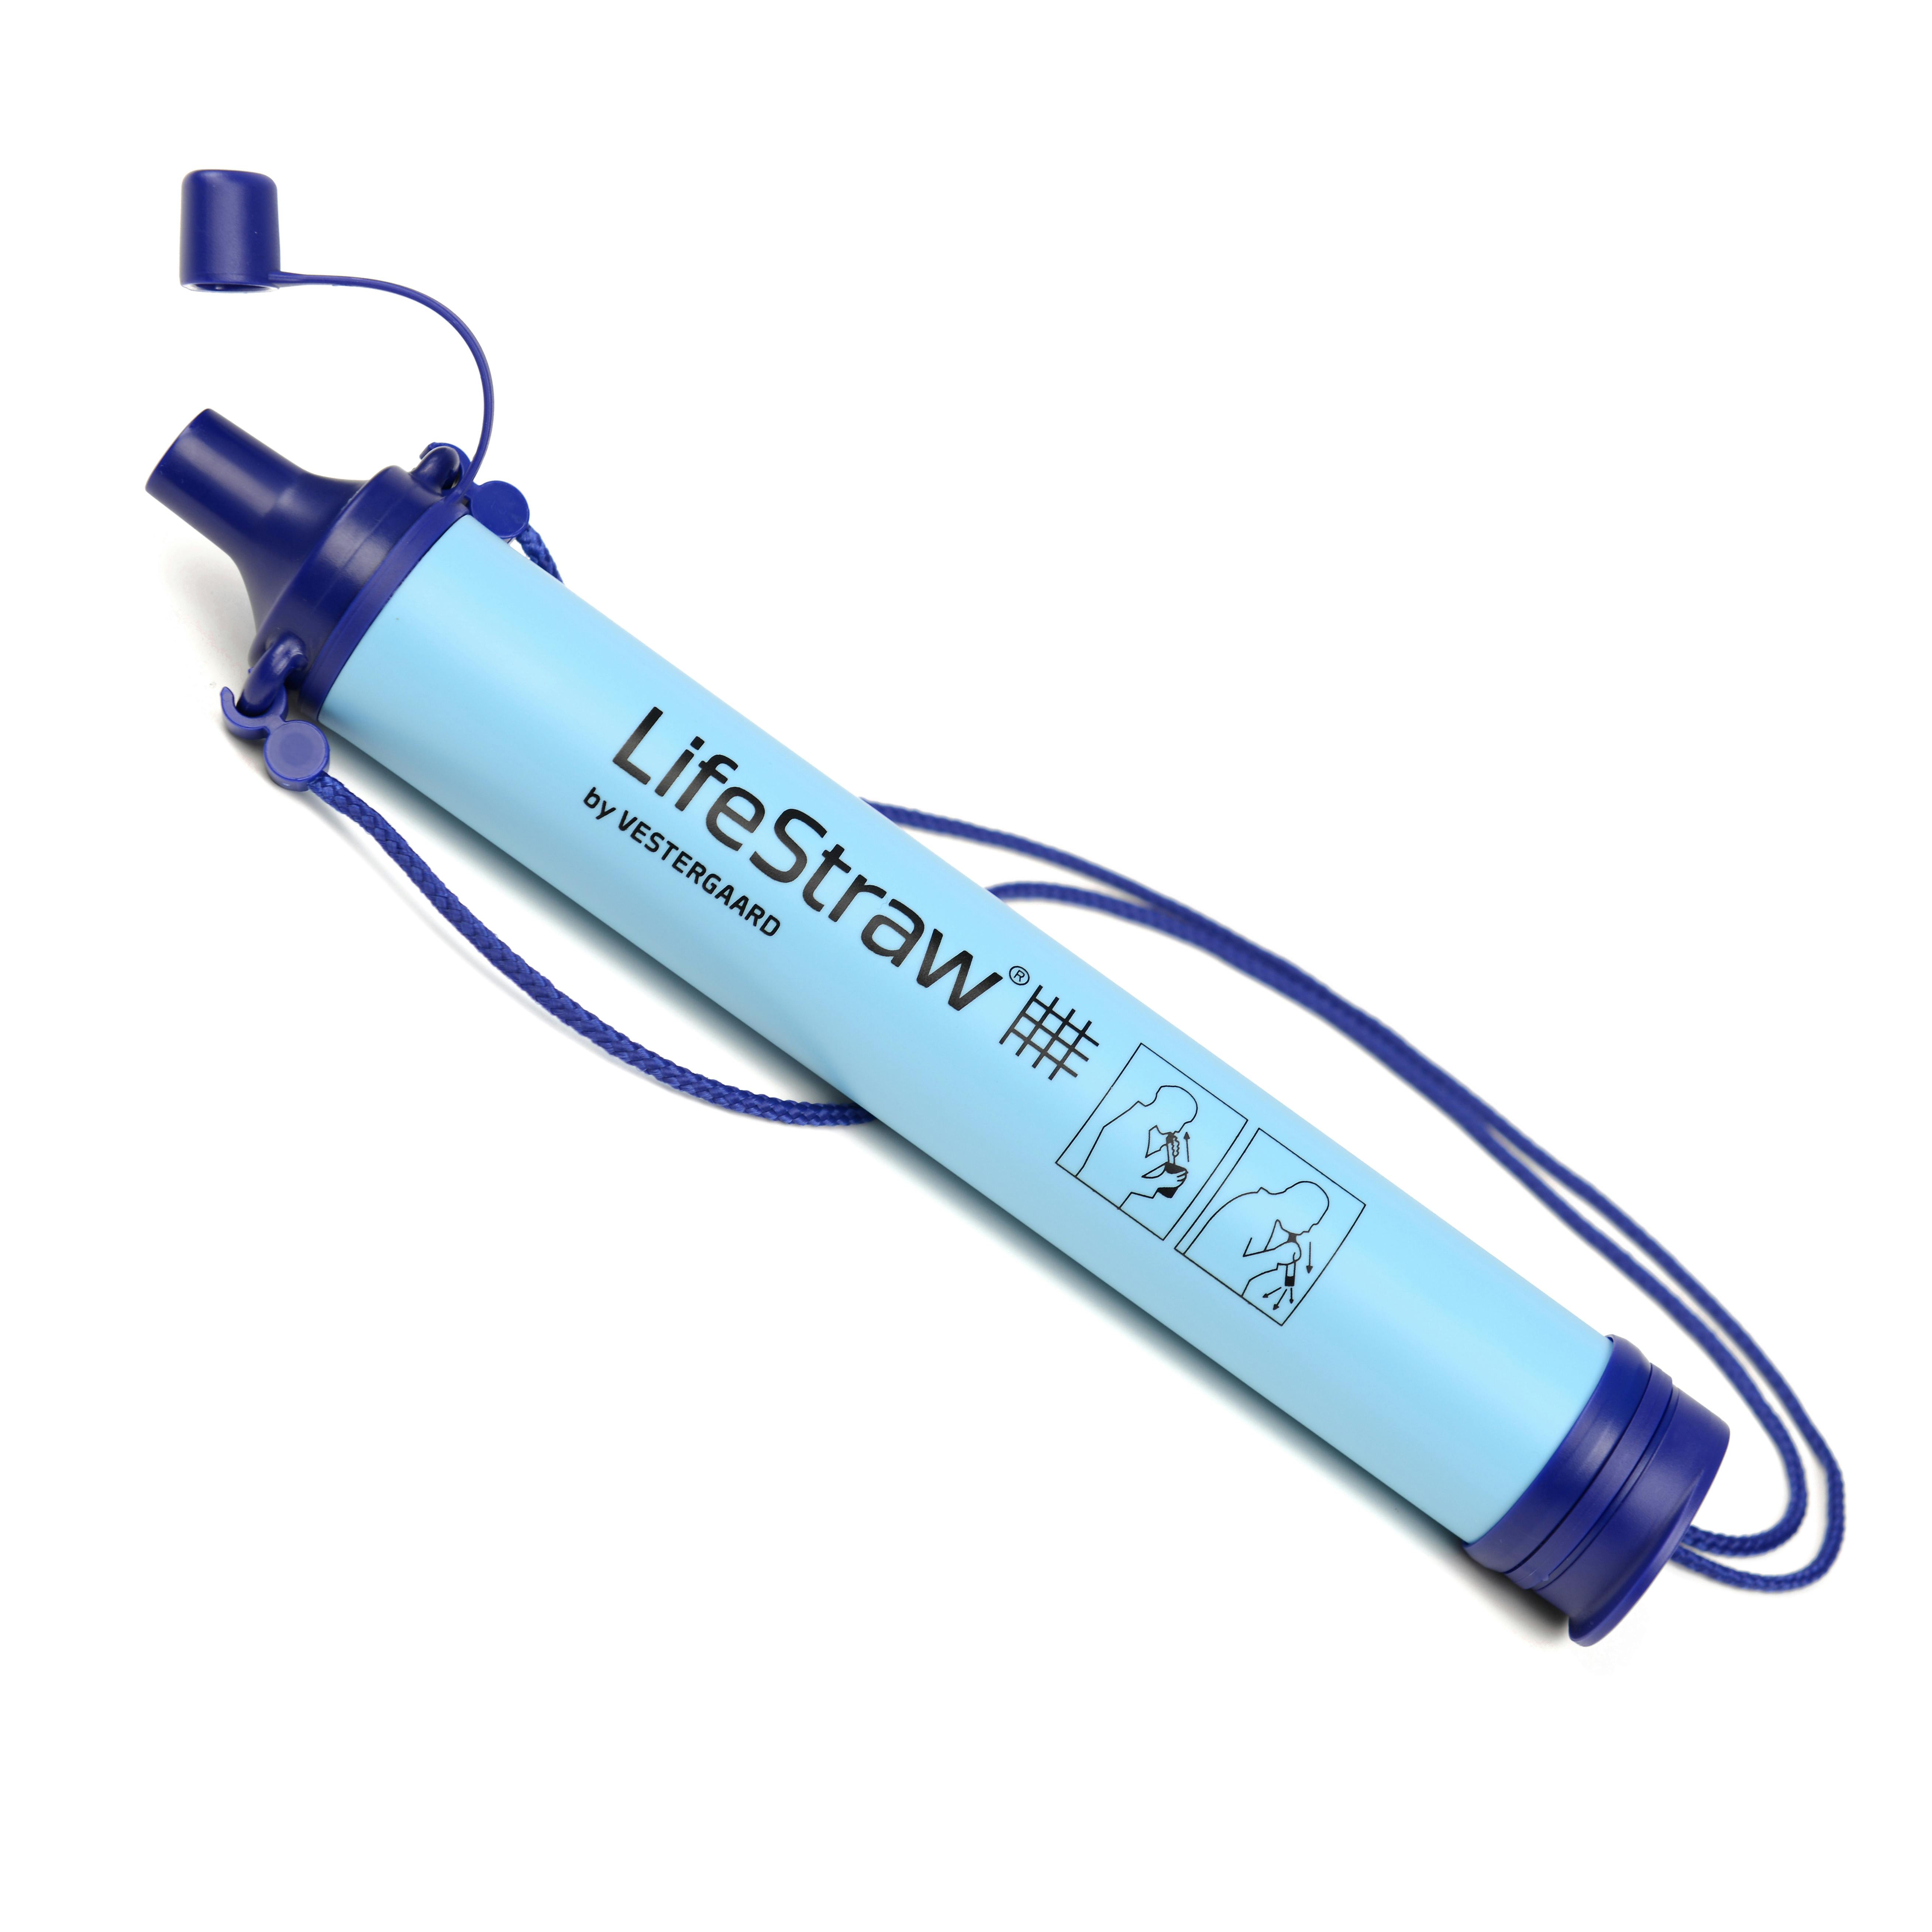 LifeStraw LifeStraw Personal Water Filter